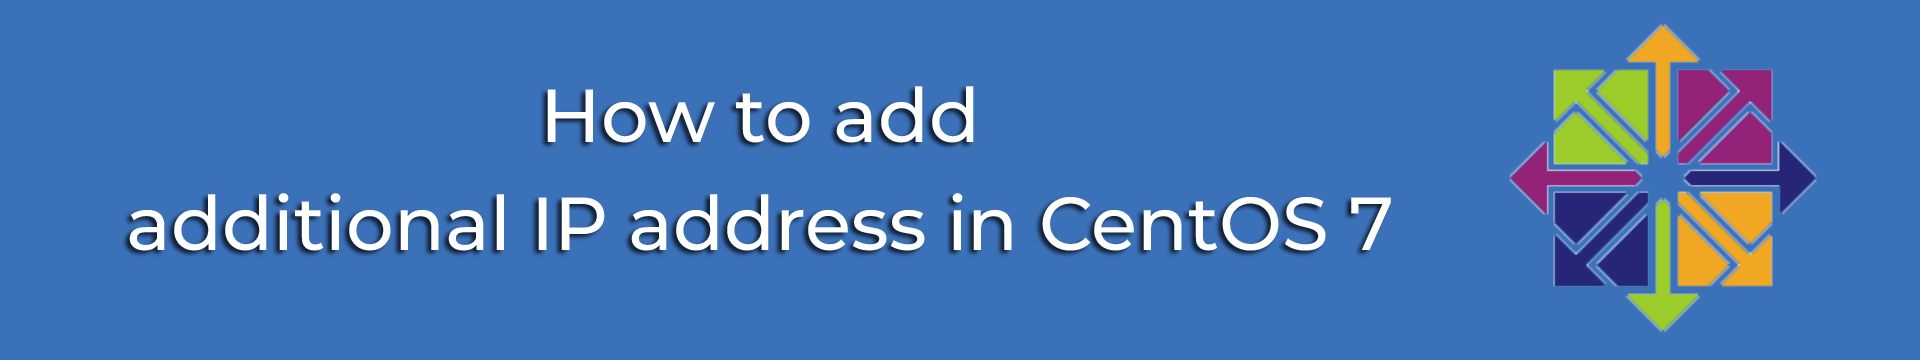 Add Secondary IP Address to Centos 7 Interface